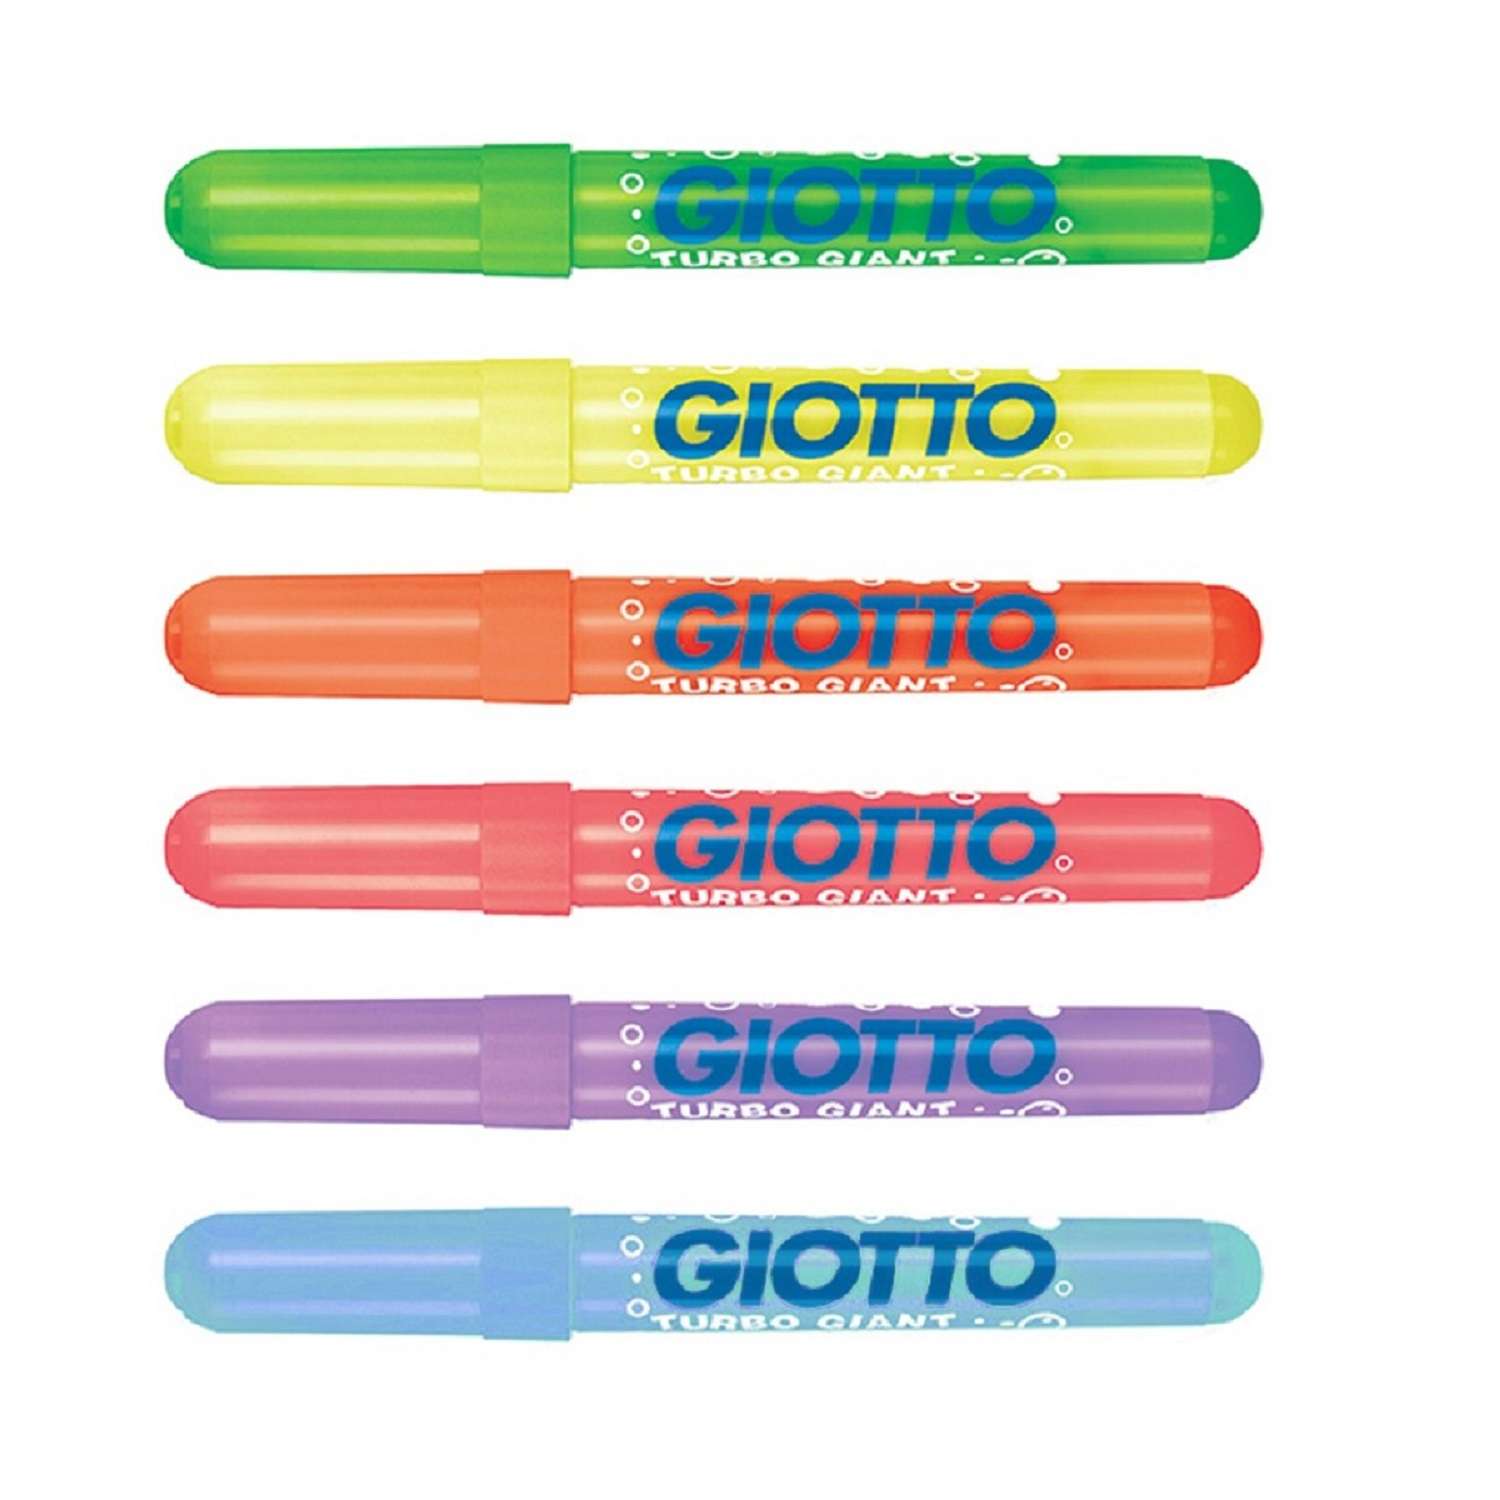 Фломастеры GIOTTO Turbo Giant Fluo утолщенные 6цветов 433000 - фото 3